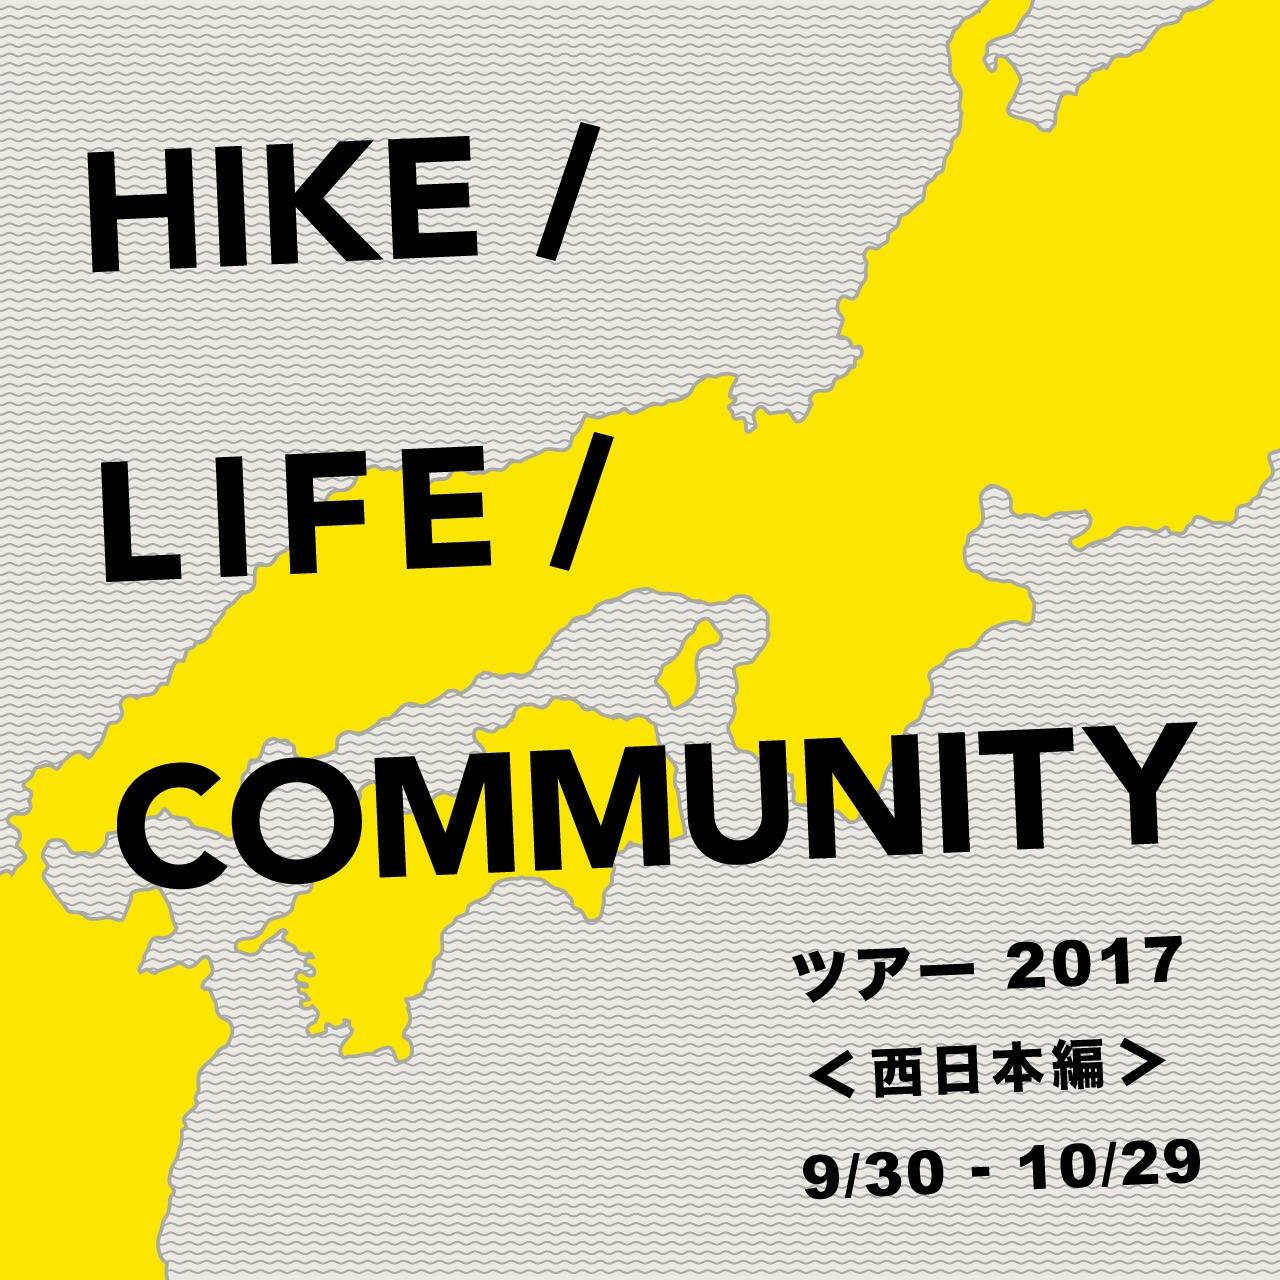 HIKE /LIFE /COMMUNITY<br> 西日本編ツアー